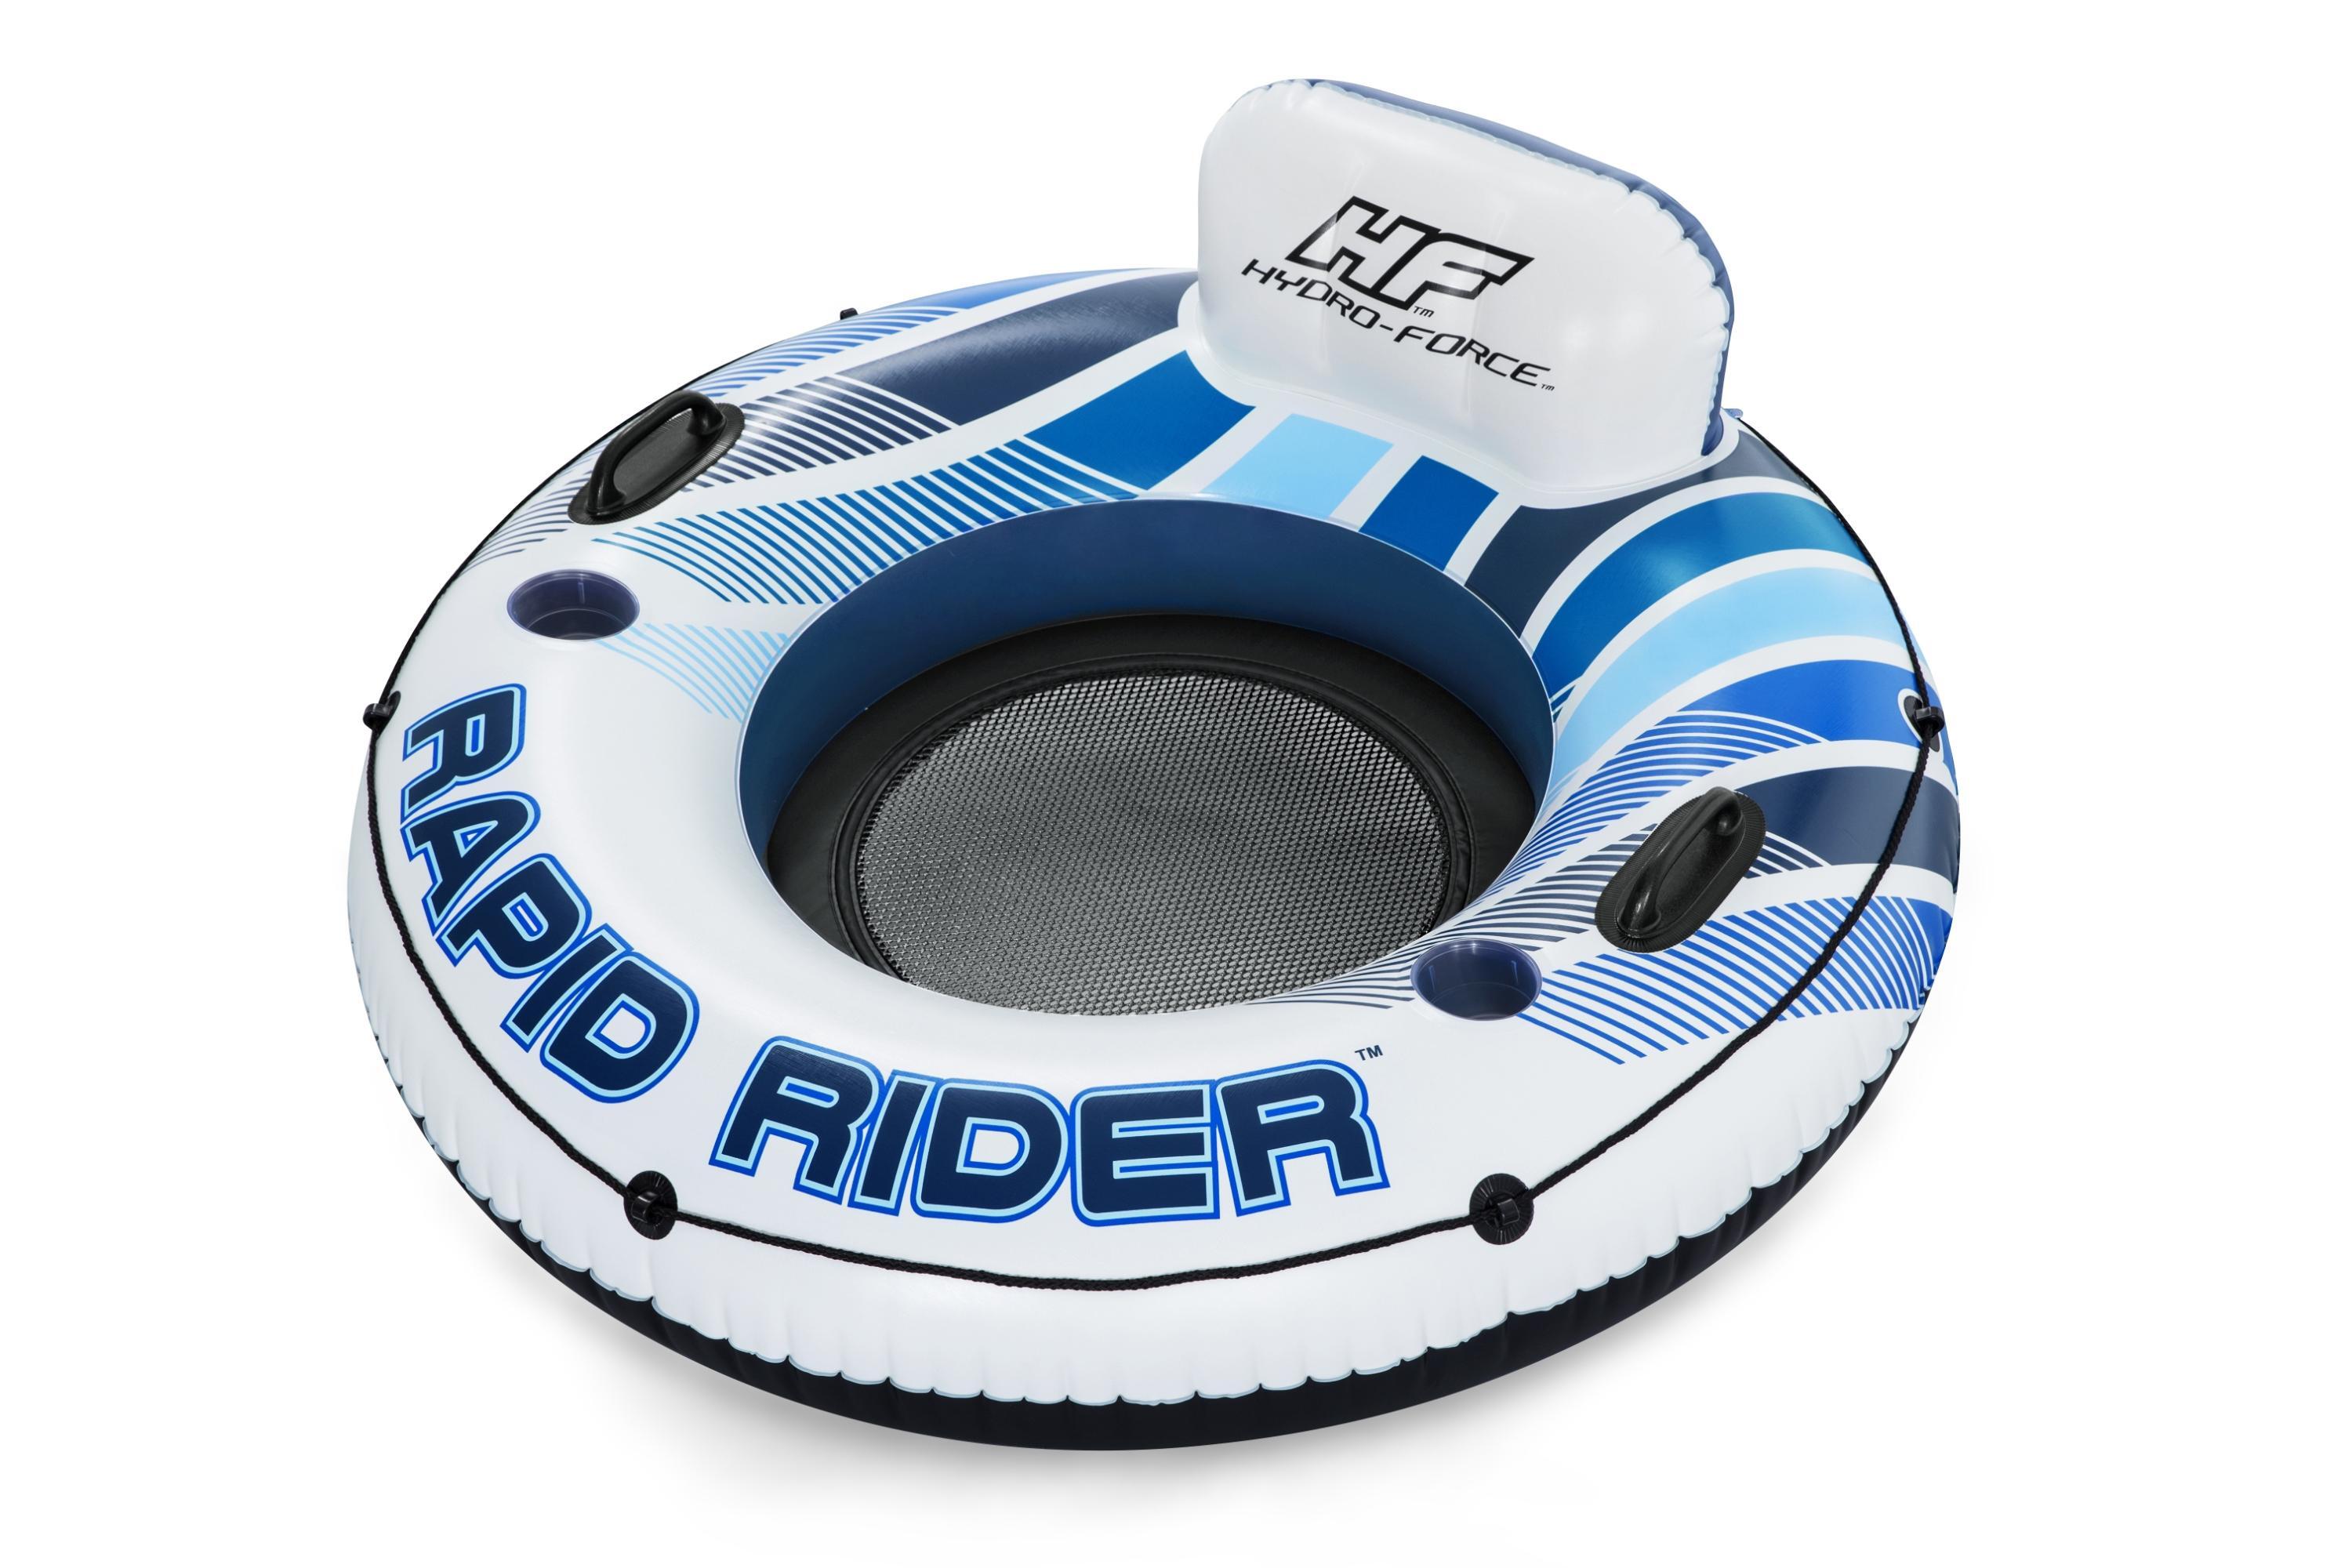 Bestway Hydro-froce rapid rider tube X1